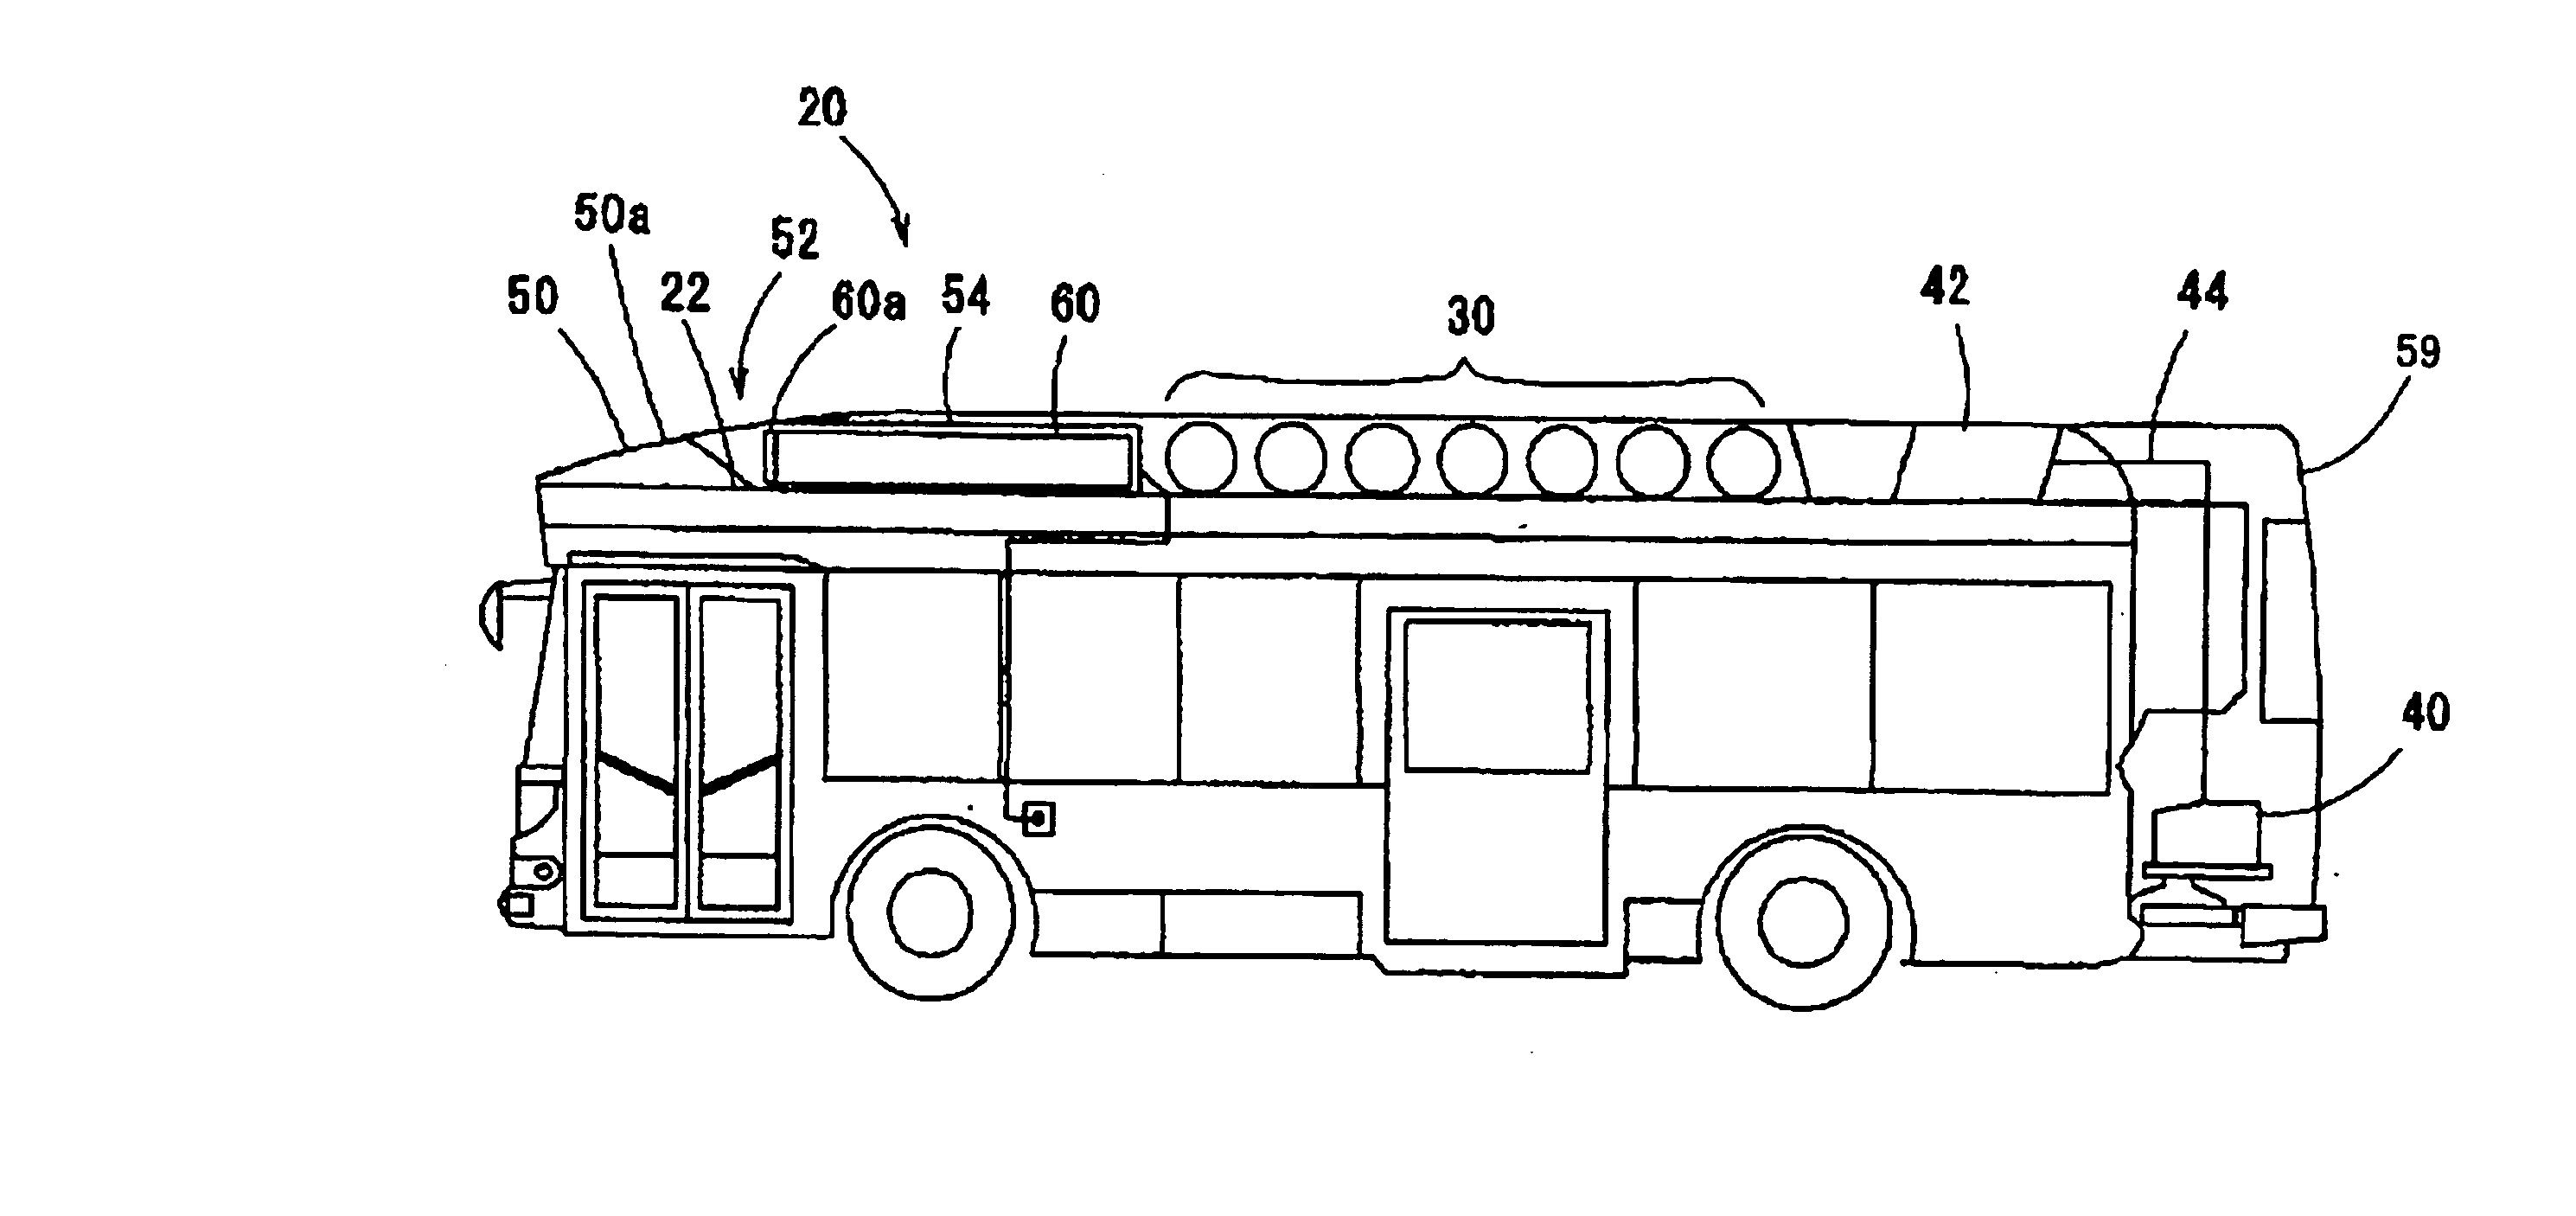 Vehicle